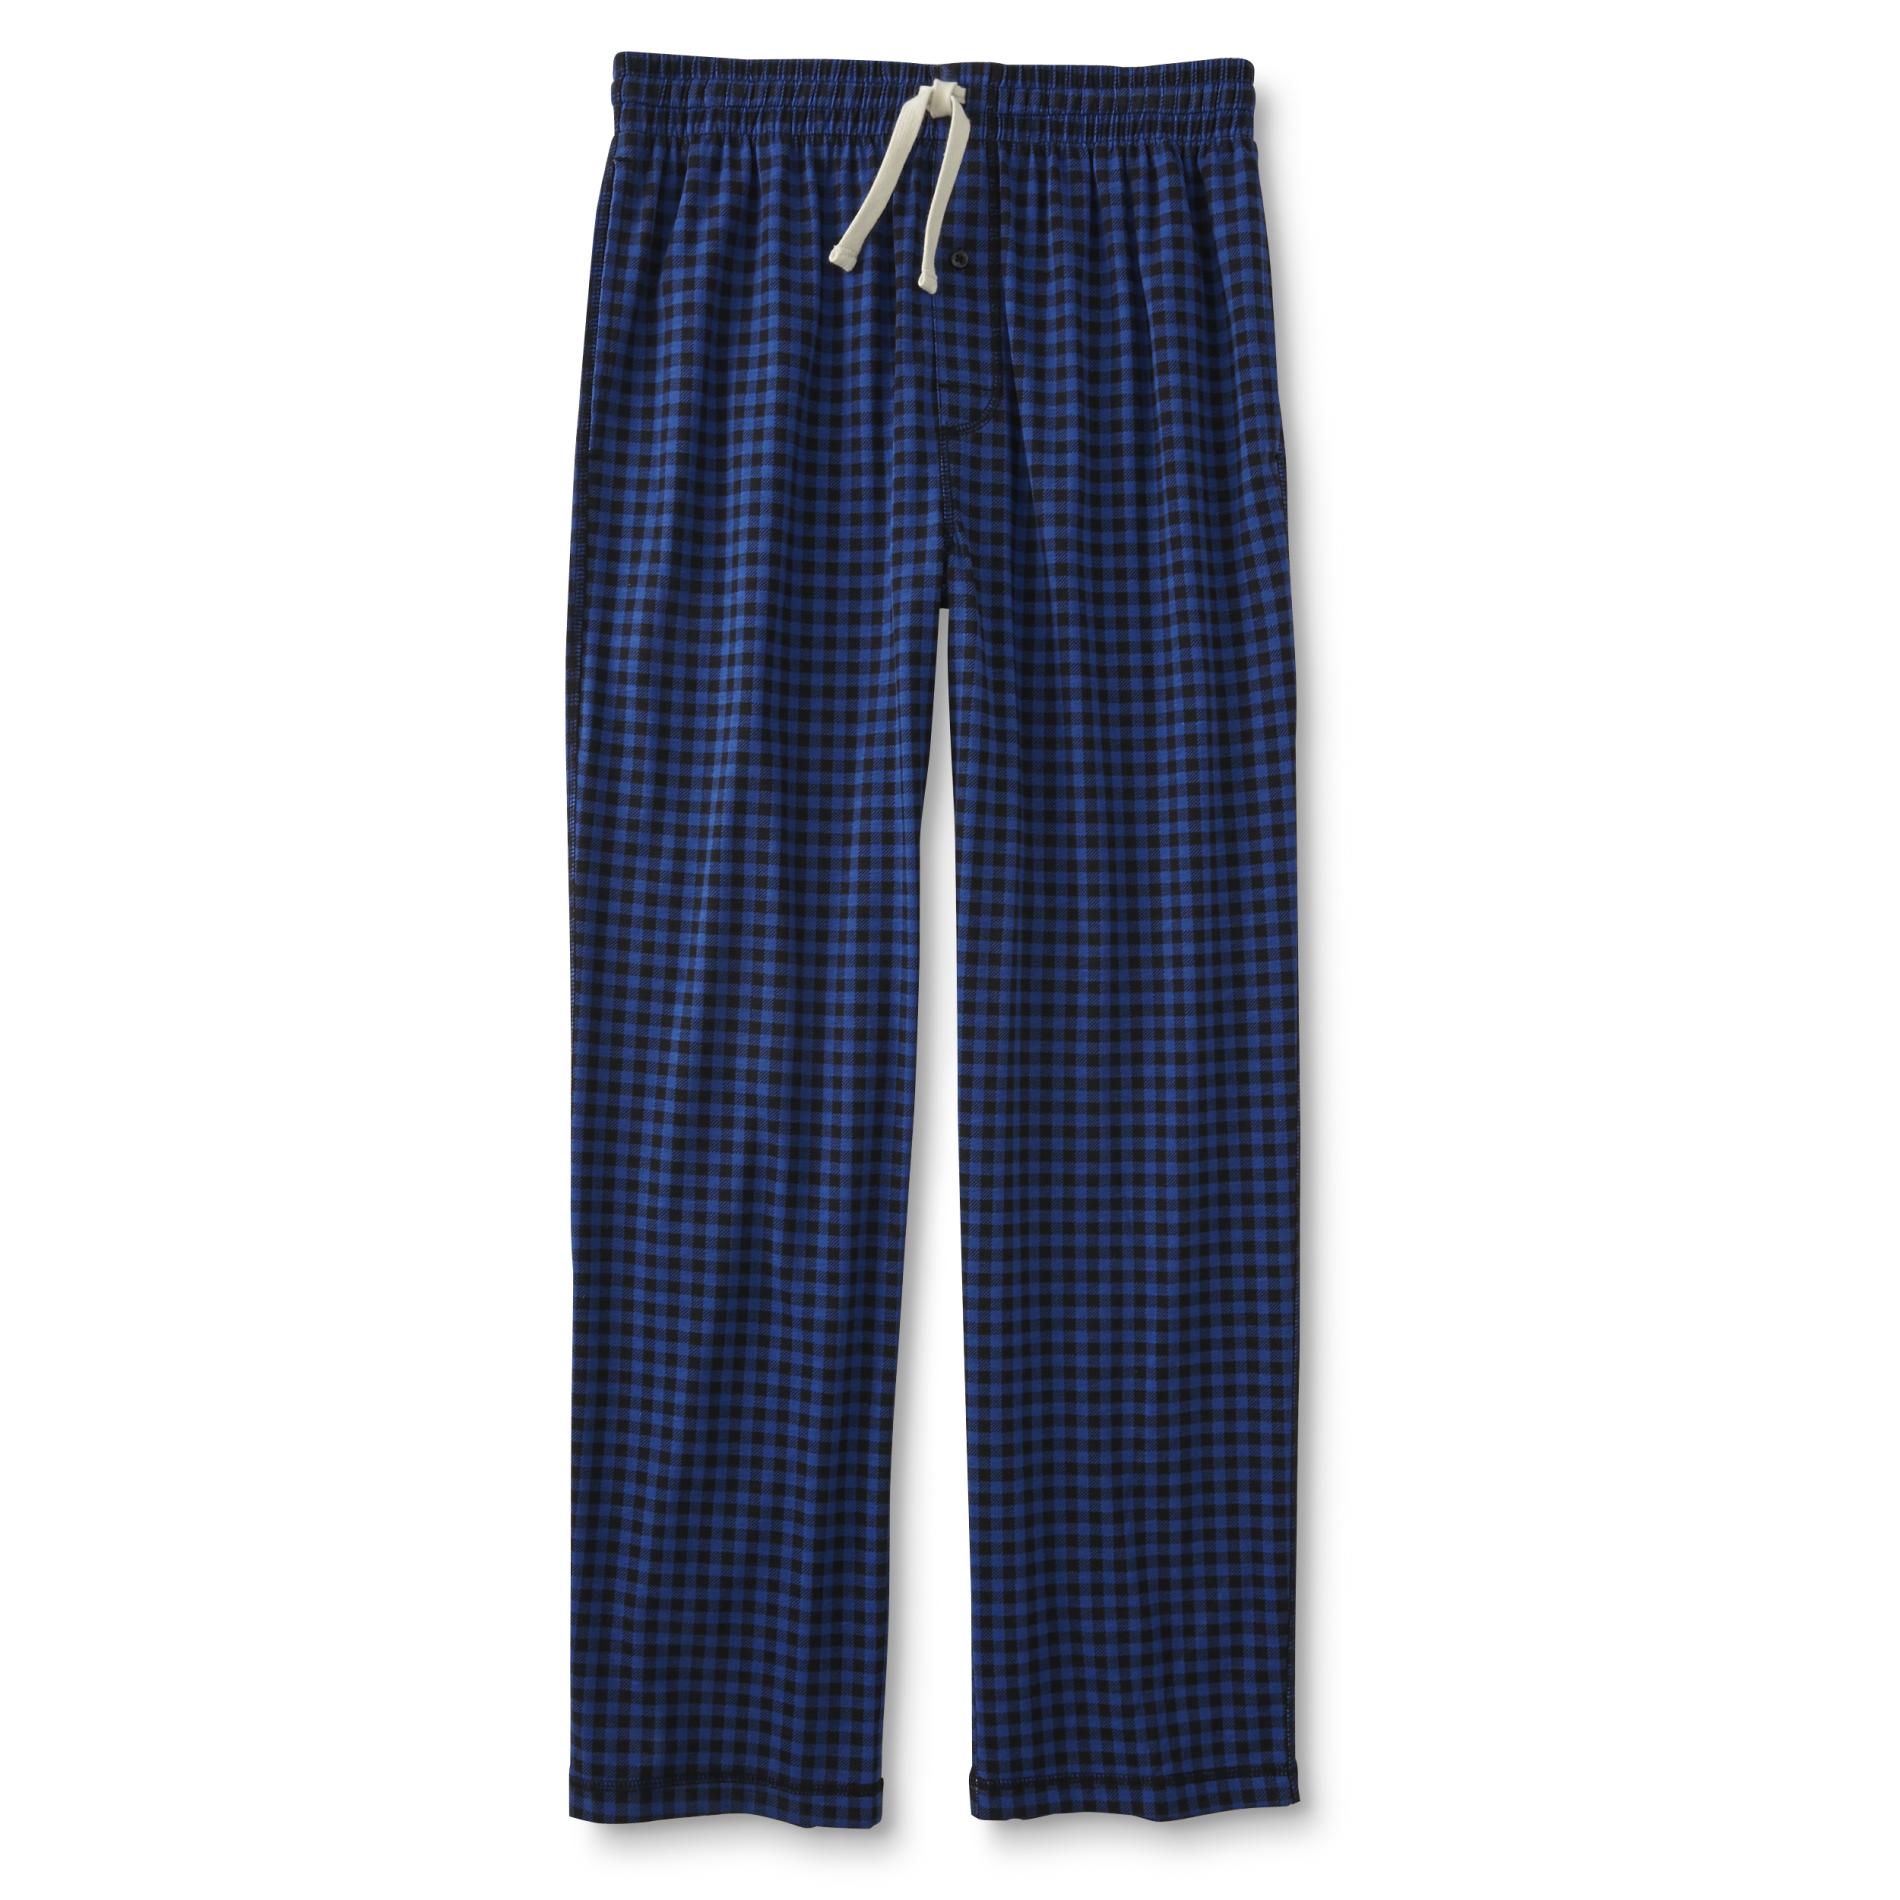 Mens Cotton Pajama Pants | Kmart.com